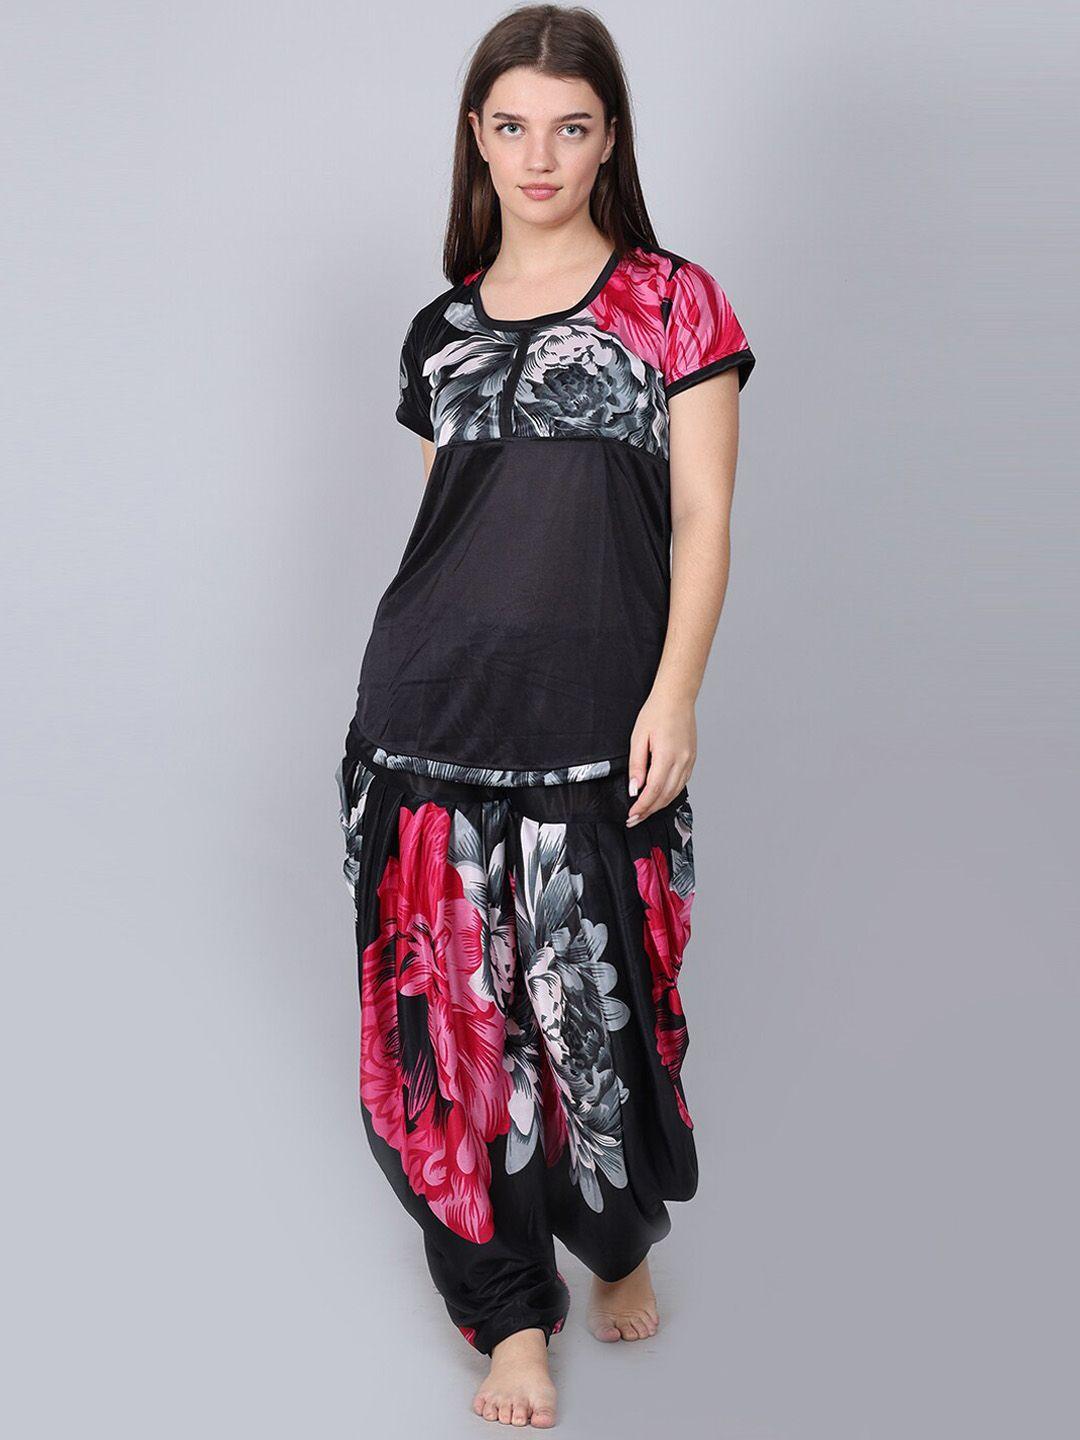 xpiox floral printed night suit